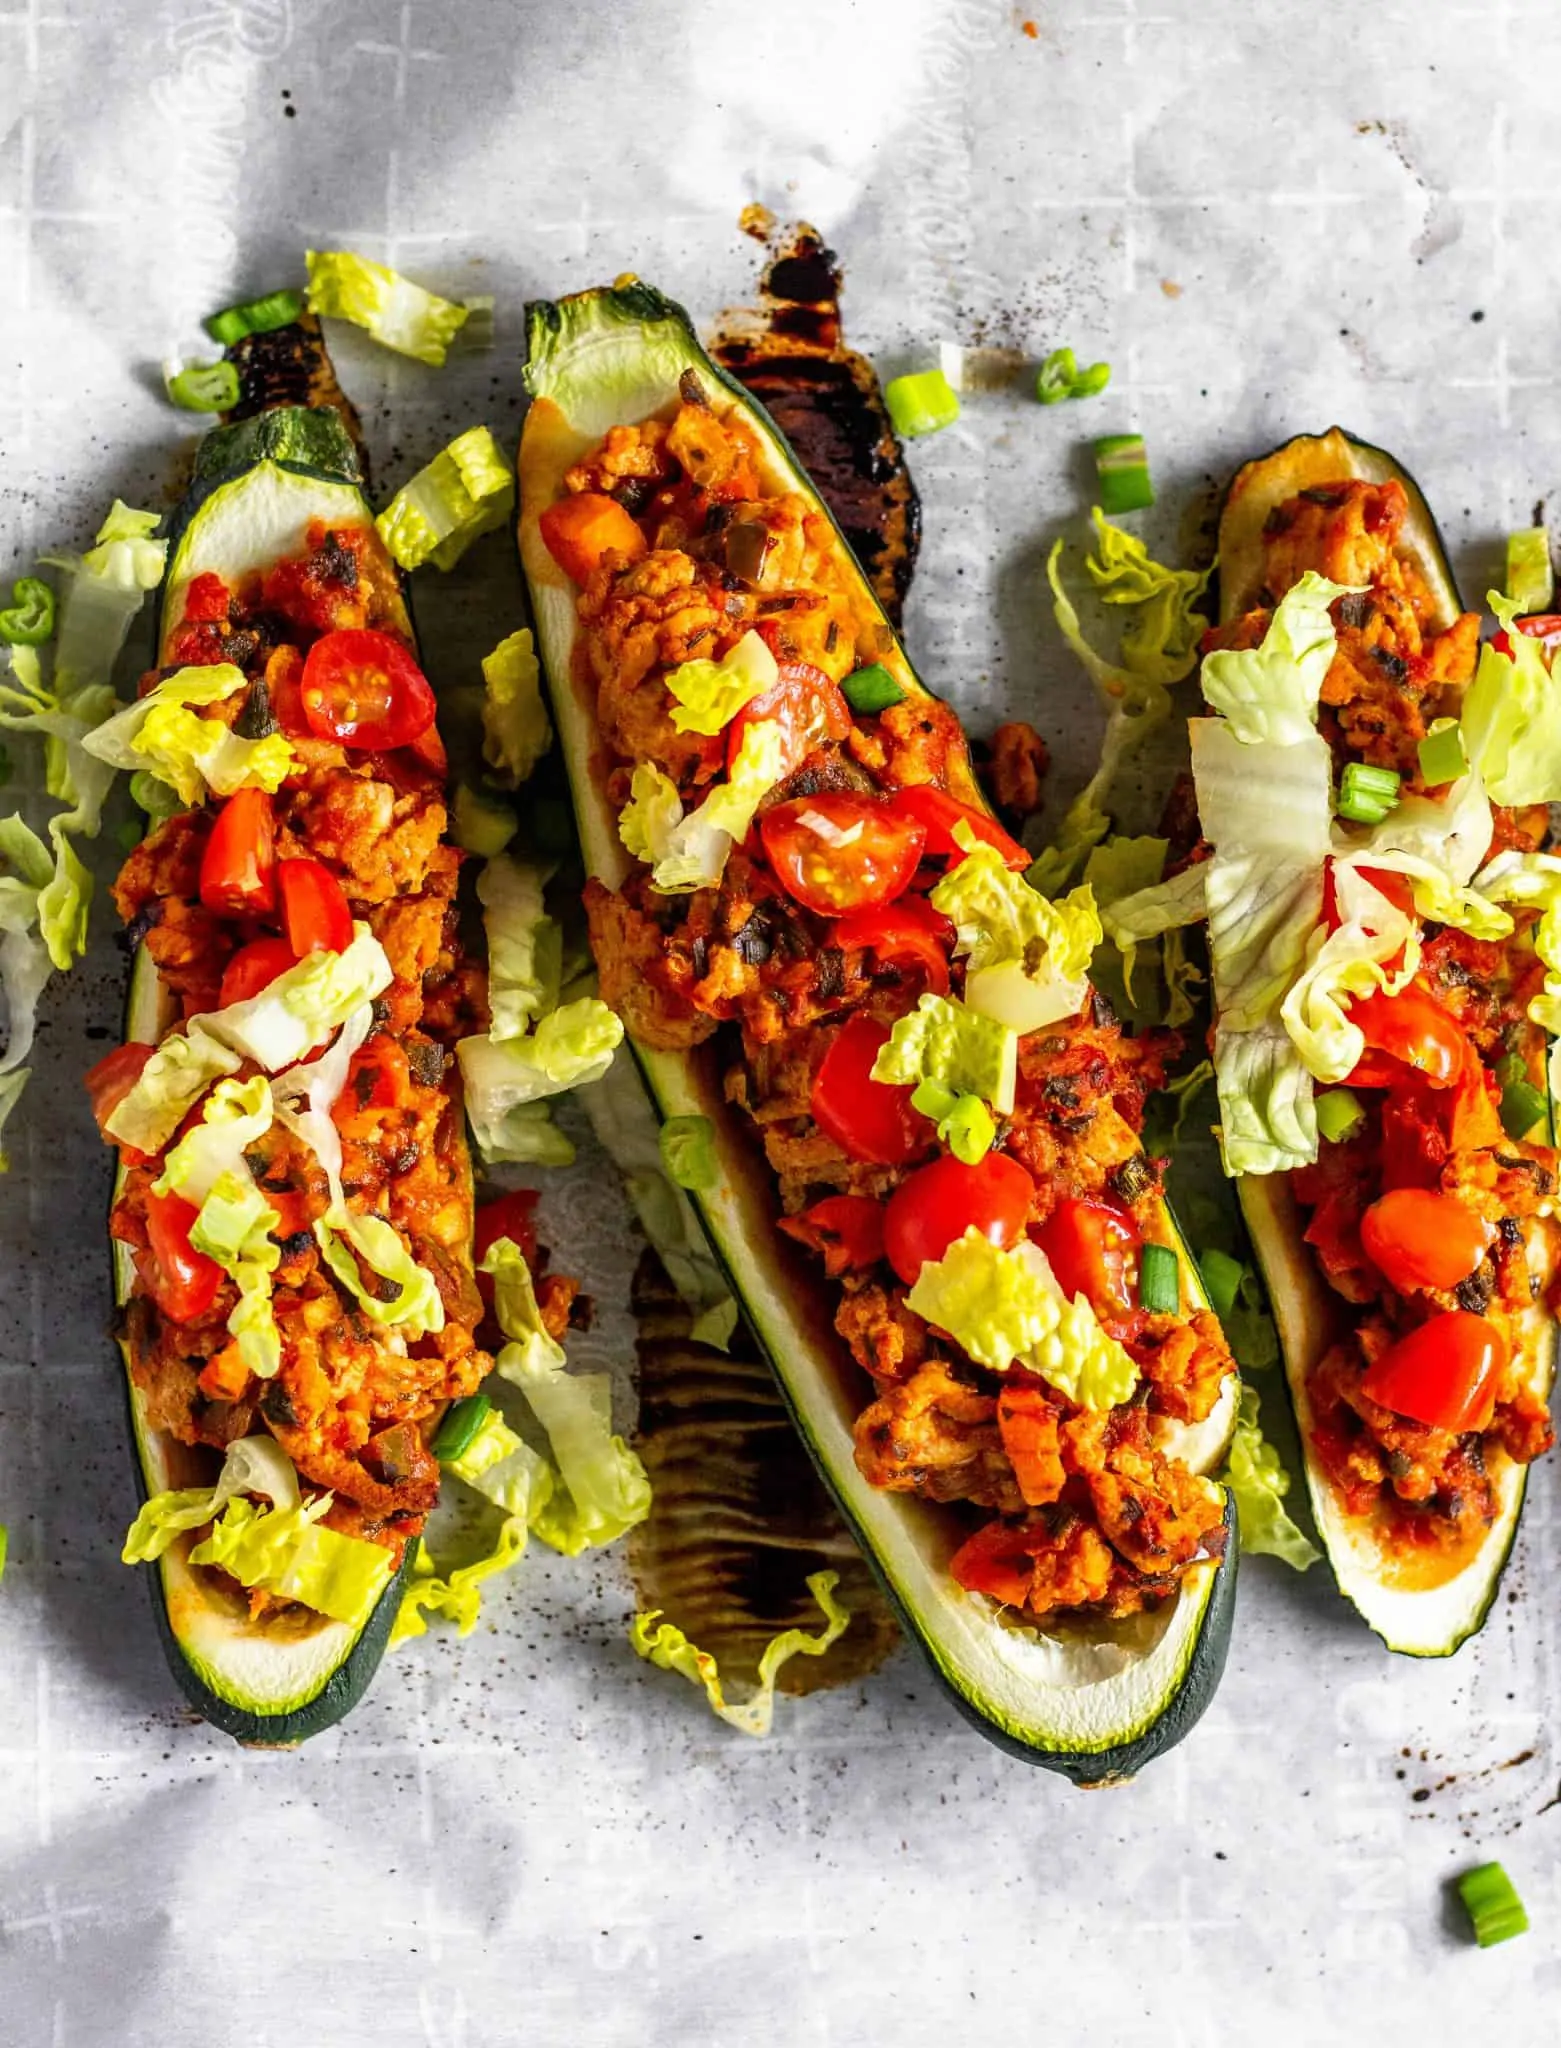 Taco Zucchini Boats #lowfodmap #tararochfordnutrition